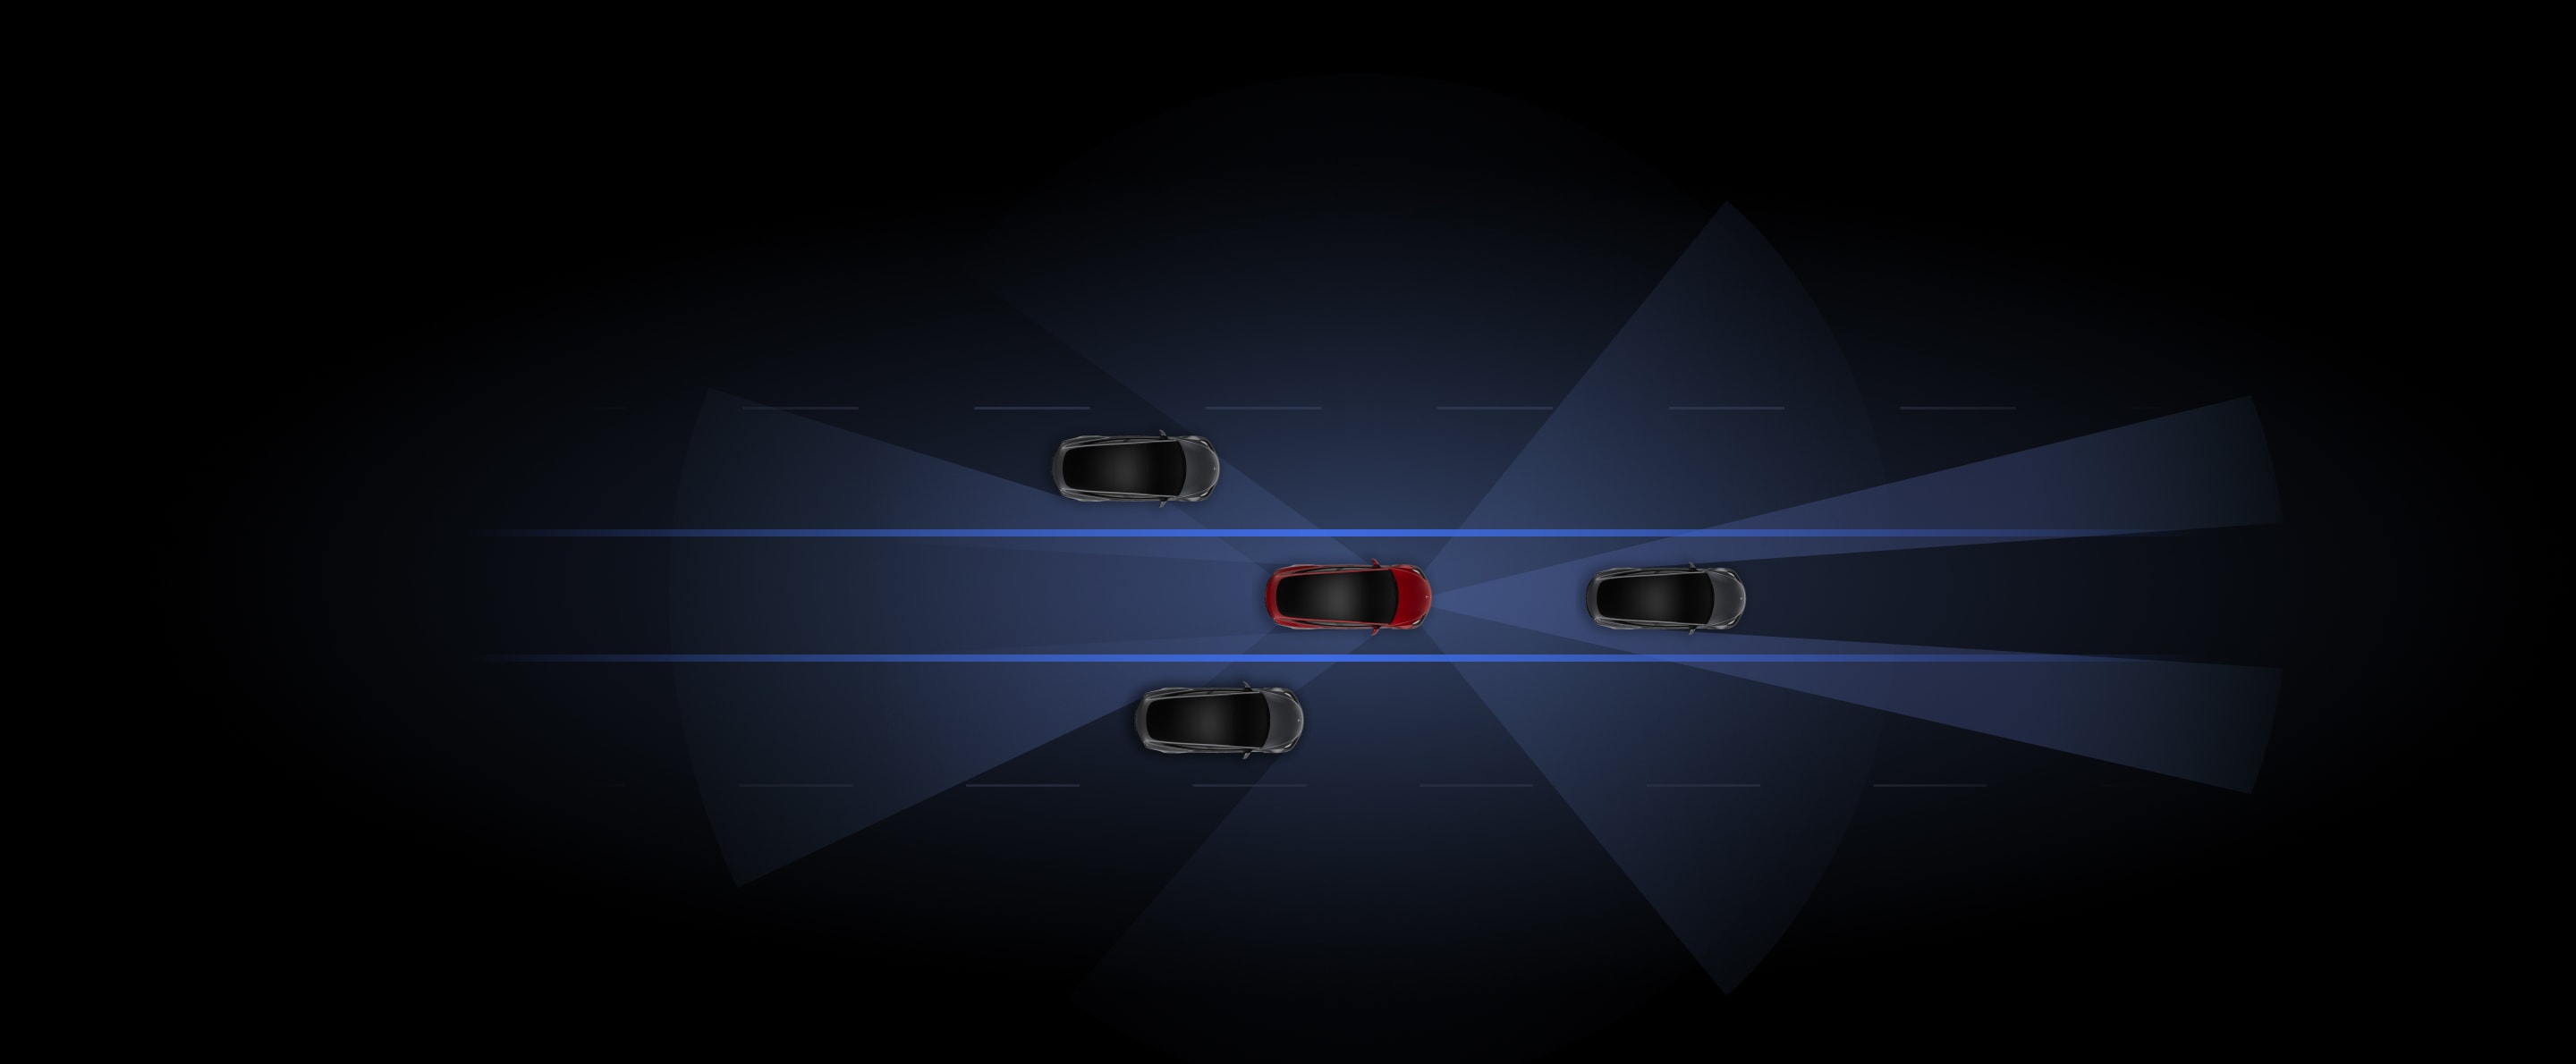 搭載 Tesla Vision 的 Autopilot 自動輔助駕駛